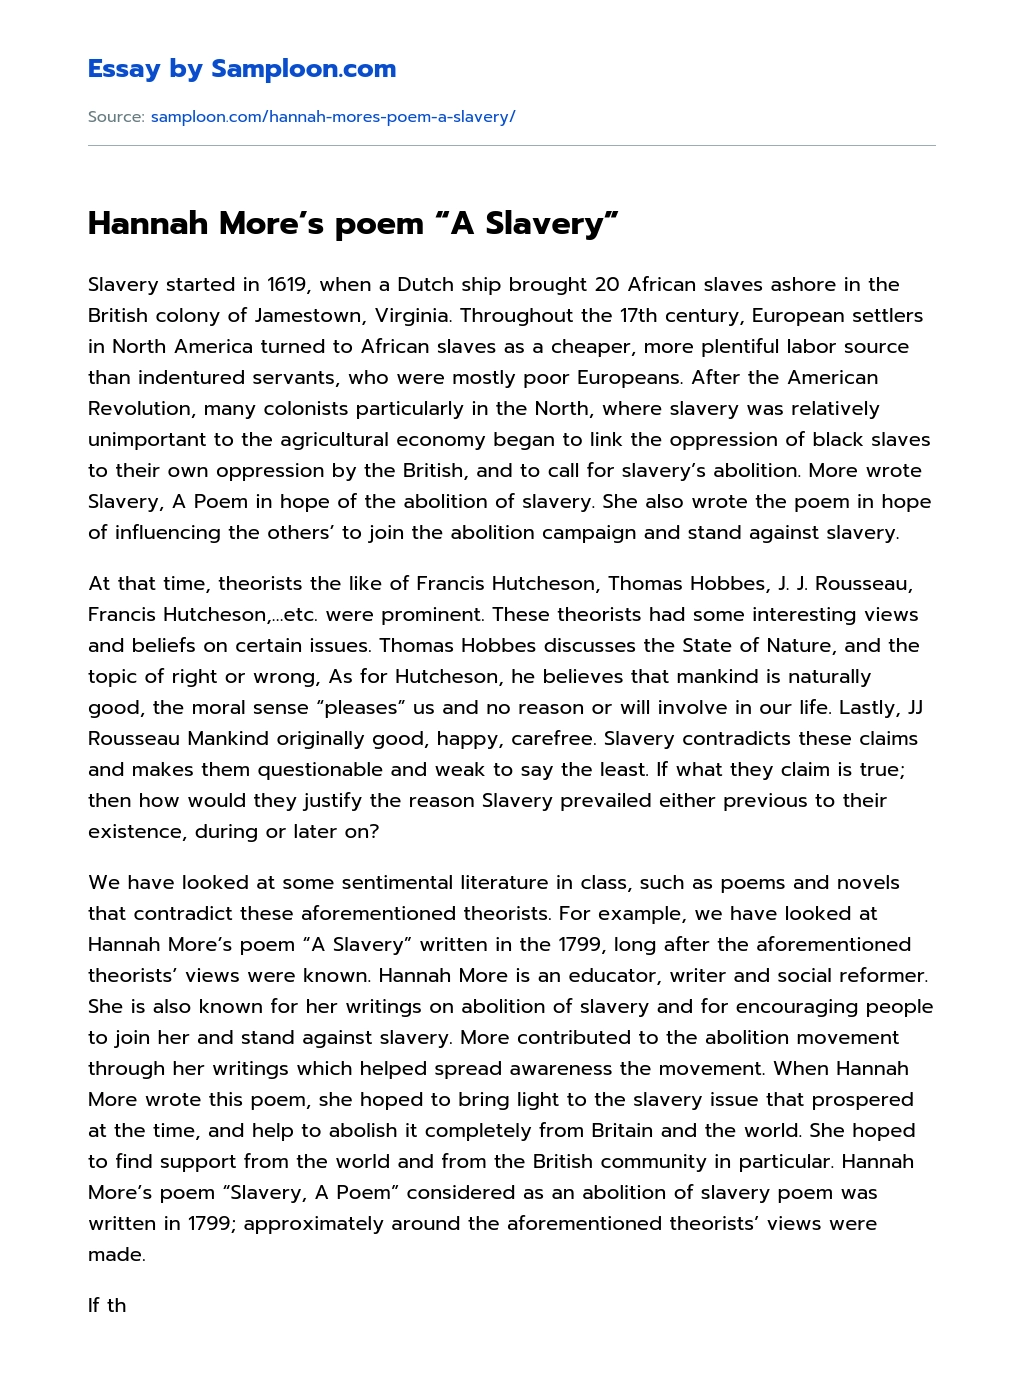 Hannah More’s poem “A Slavery” Analytical Essay essay